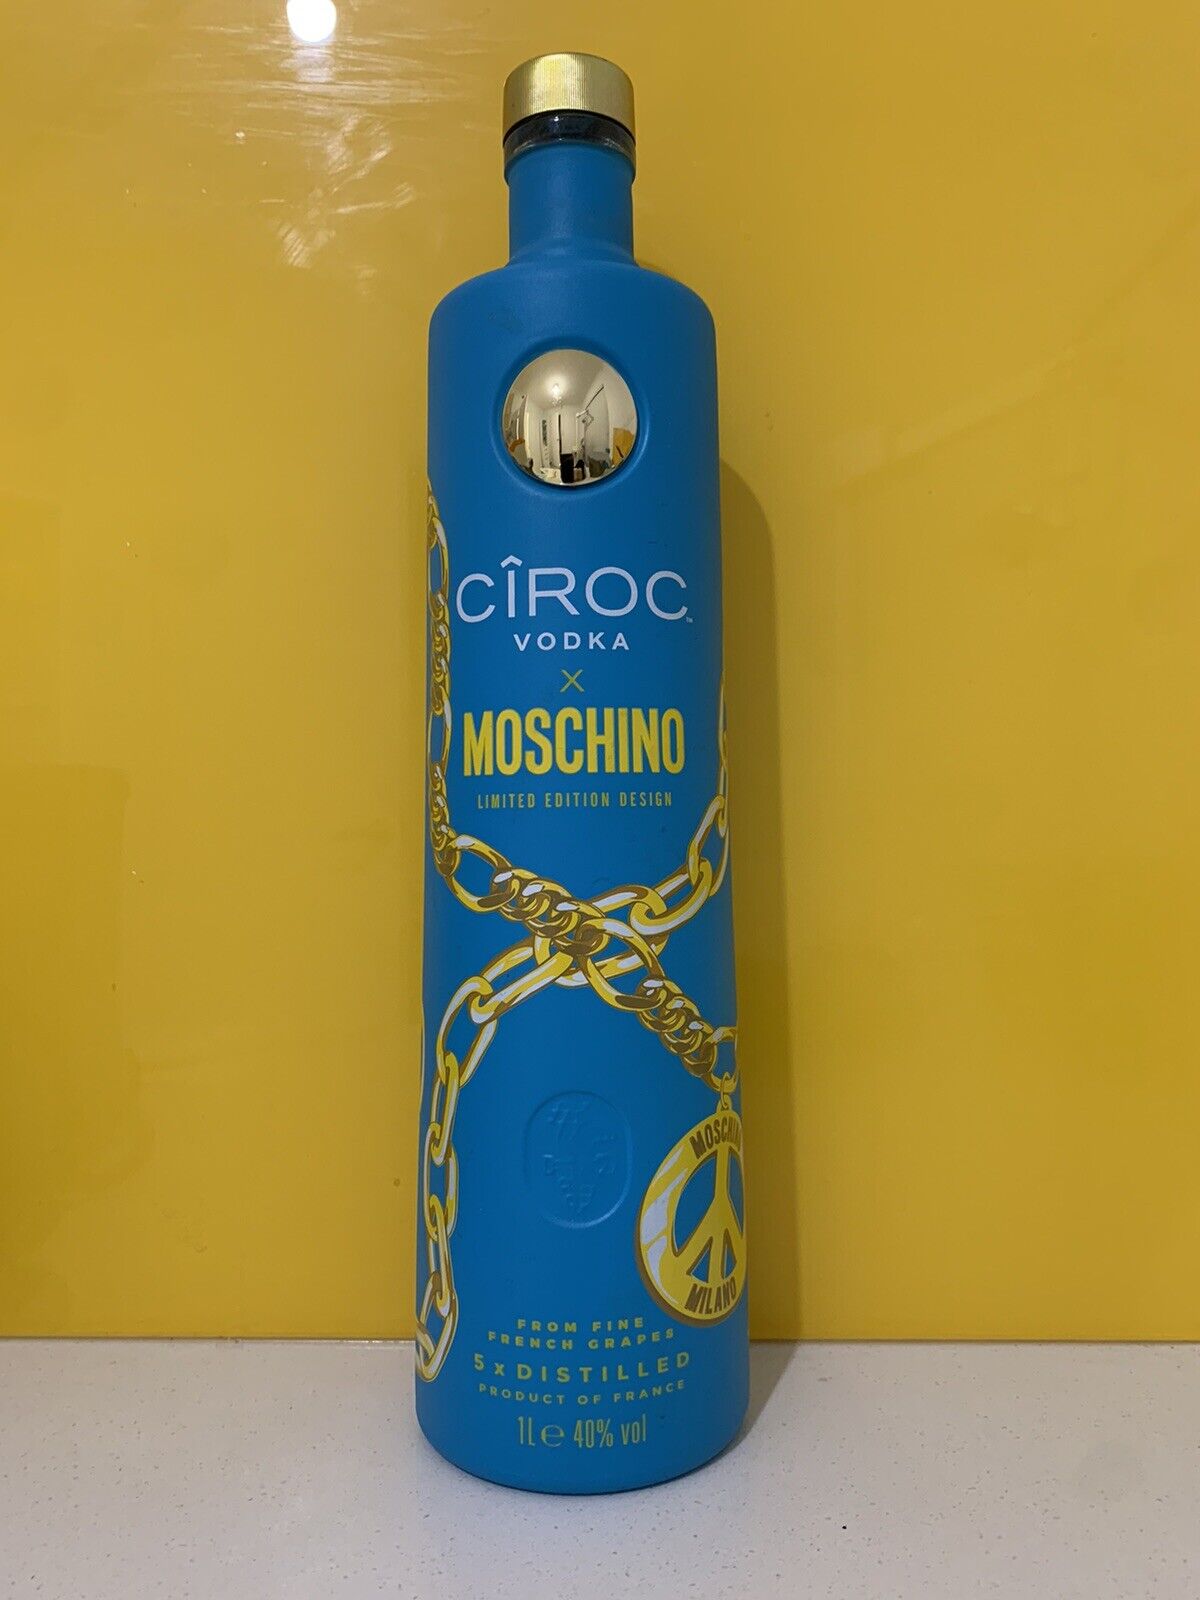 Ciroc Vodka MOSCHINO Limited Edition Design 1 Litre * EMPTY* Bottle No Alcohol